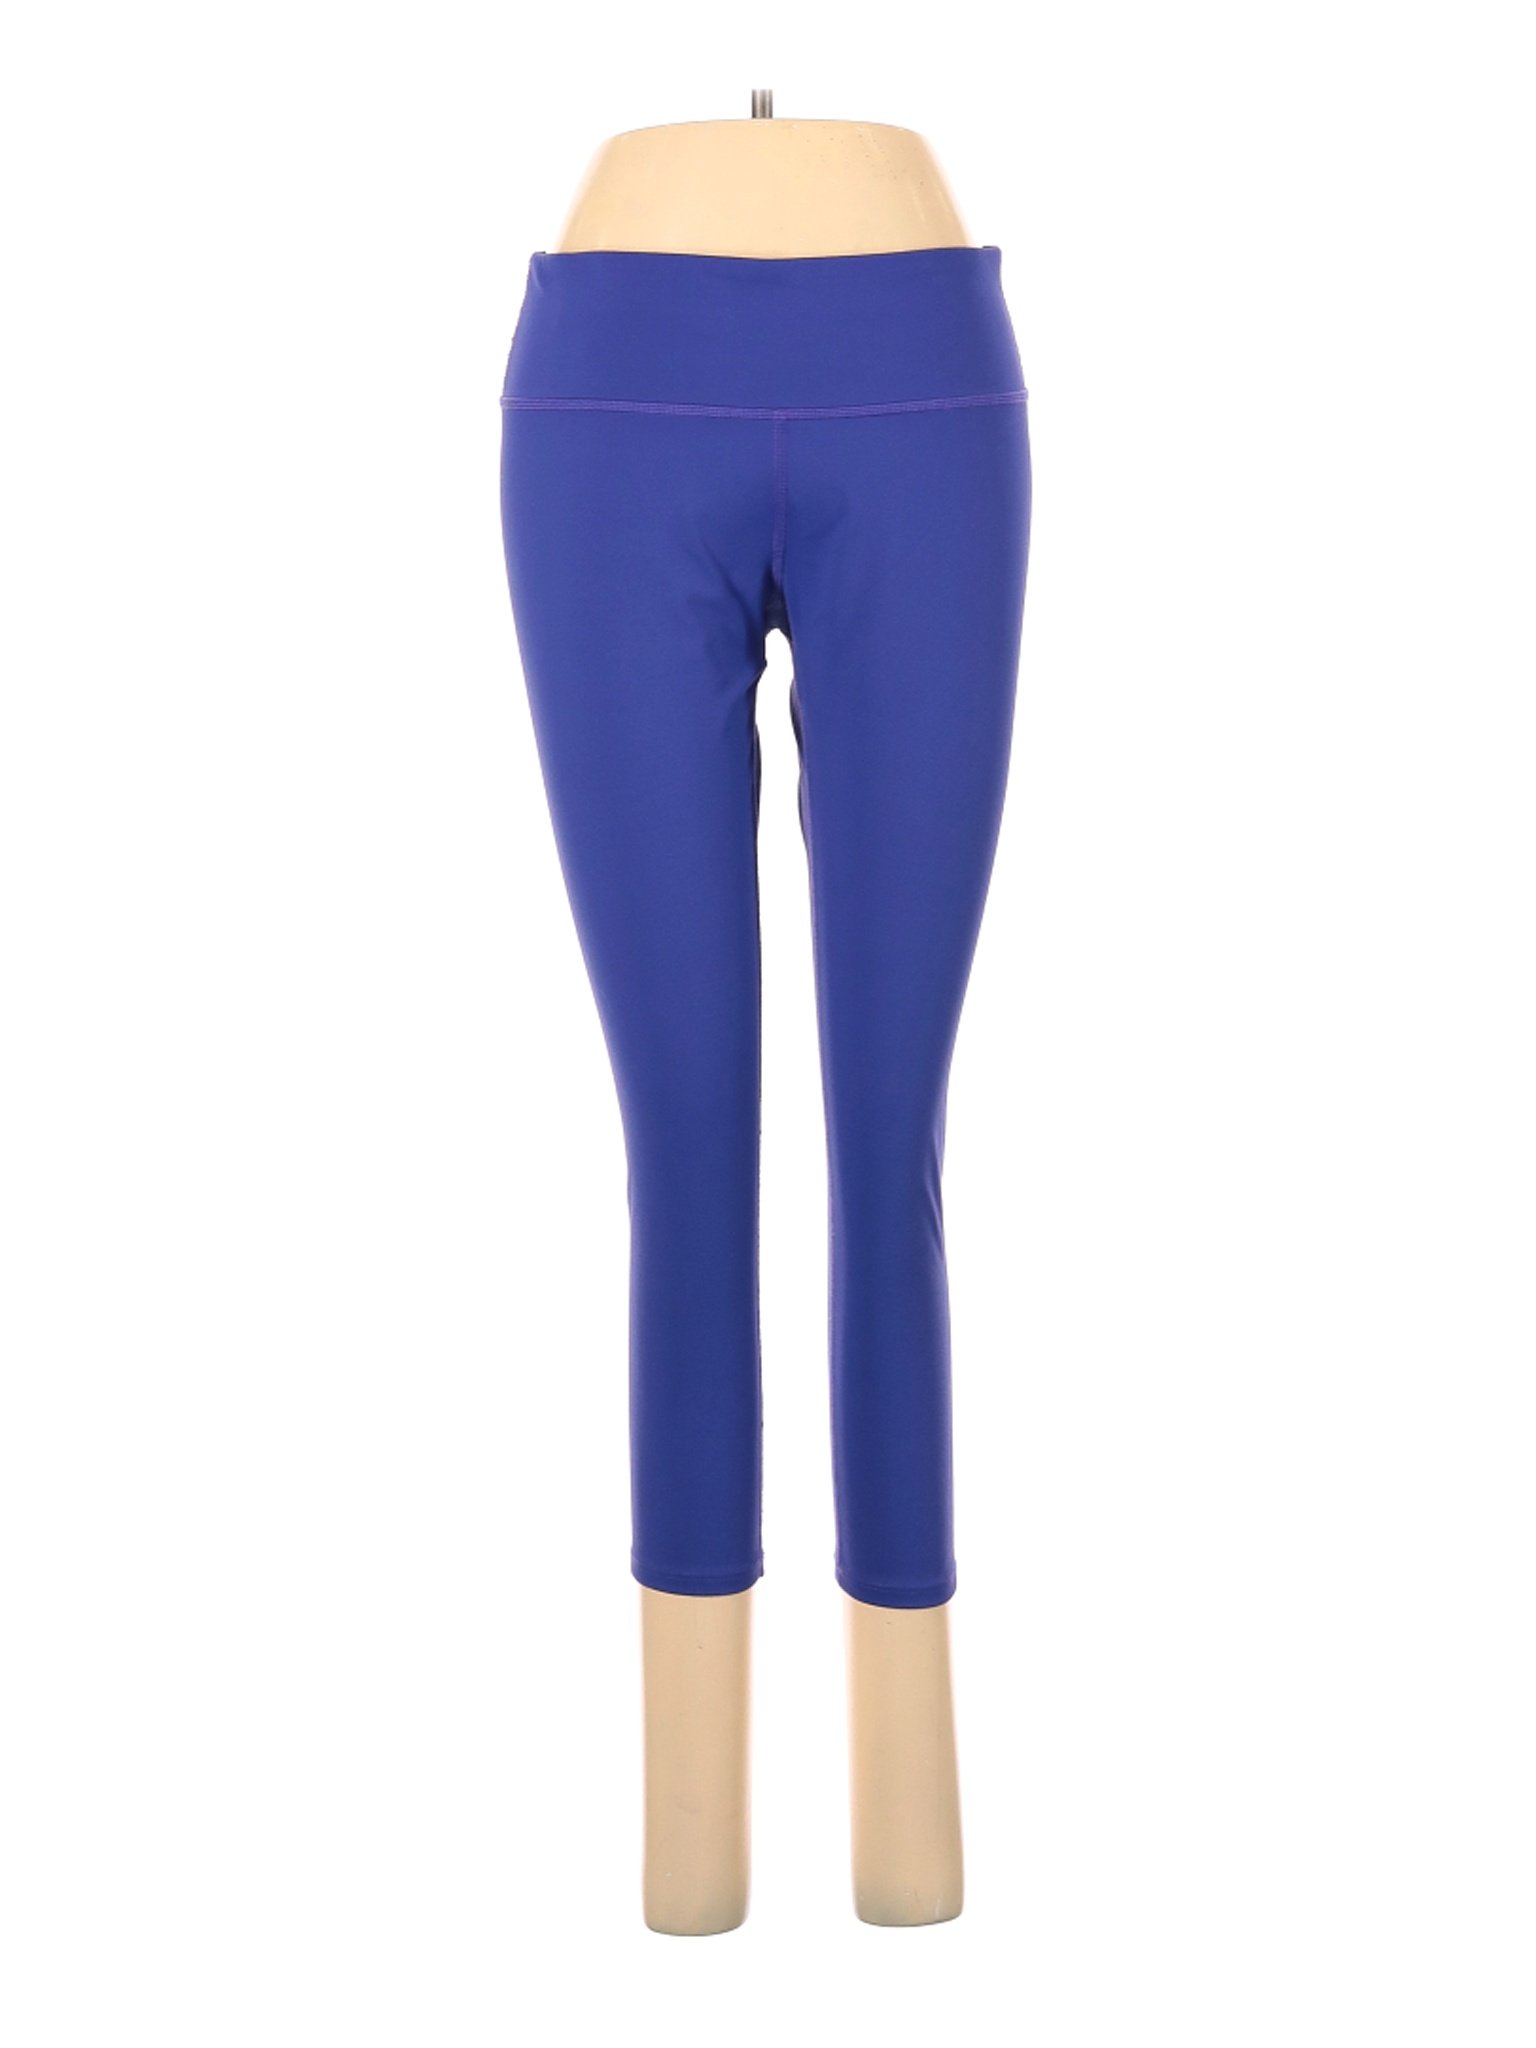 REI Women Blue Yoga Pants M | eBay